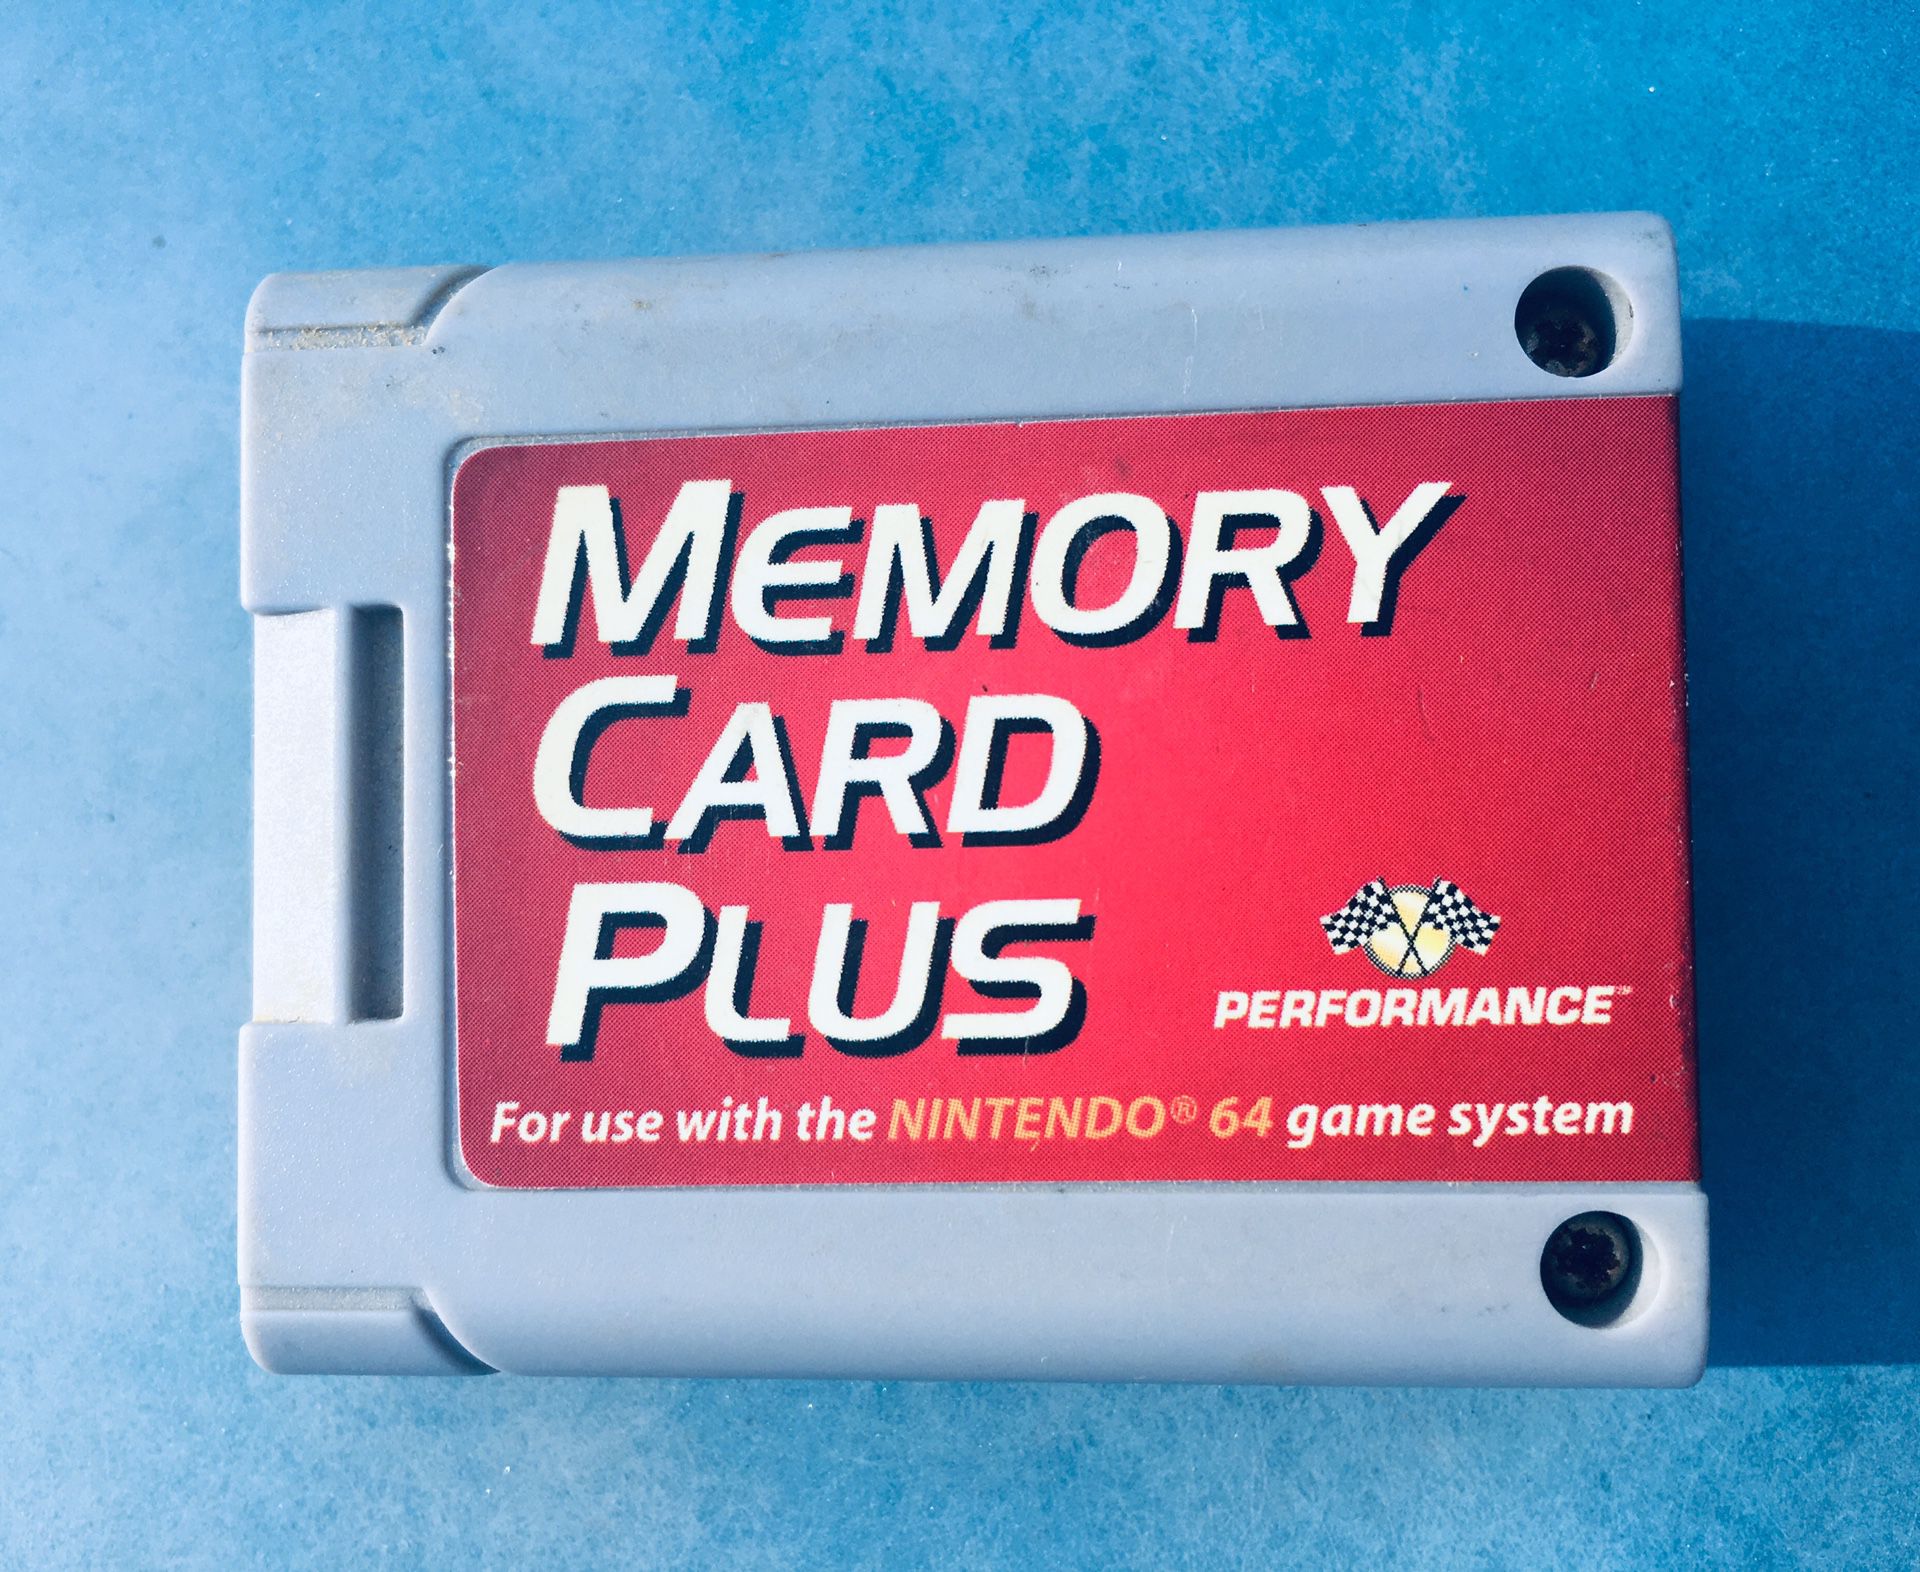 Nintendo 64 memory card plus